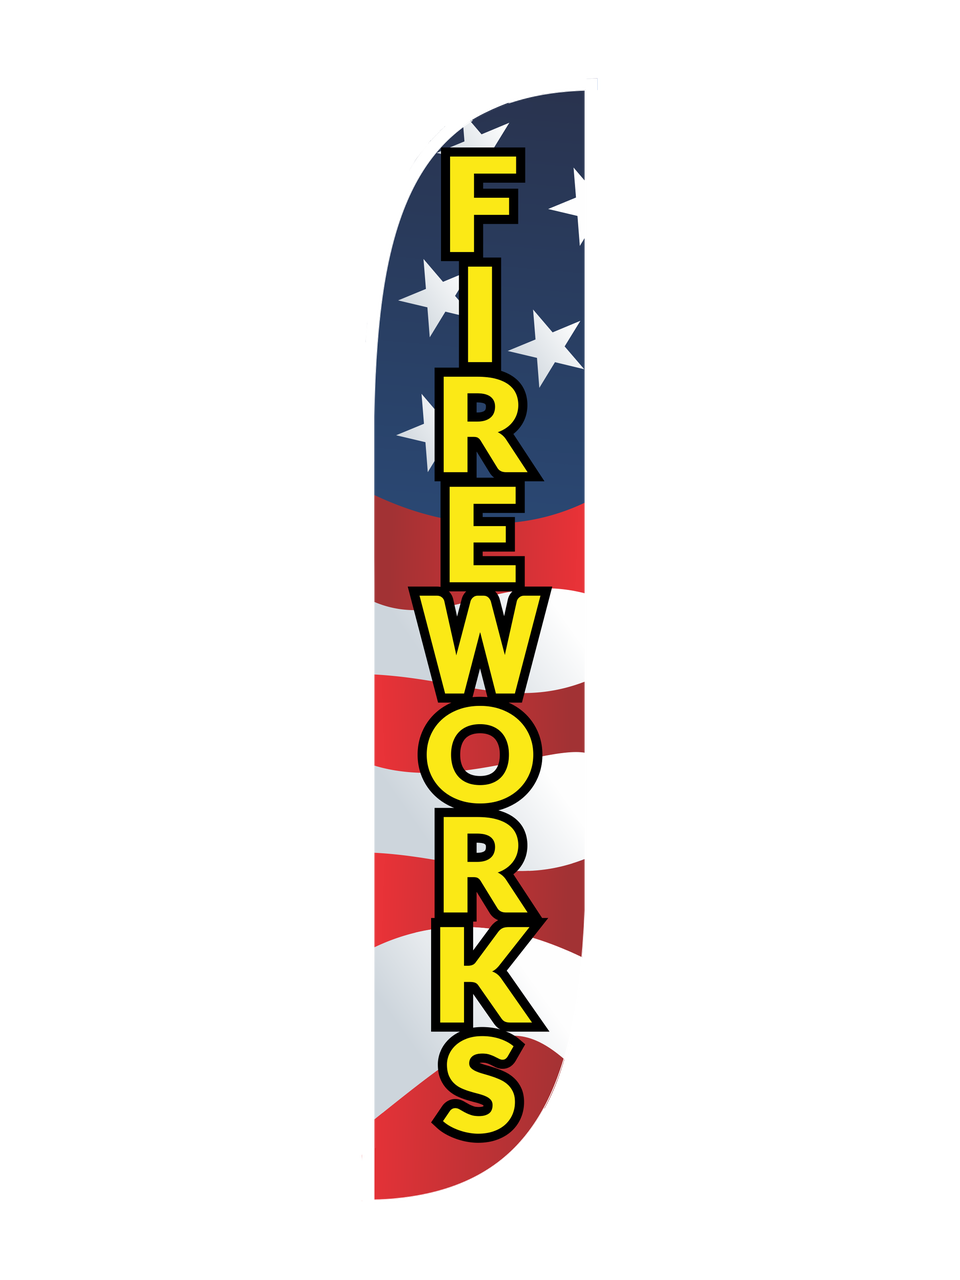 12ft Fireworks Feather Flag RWB